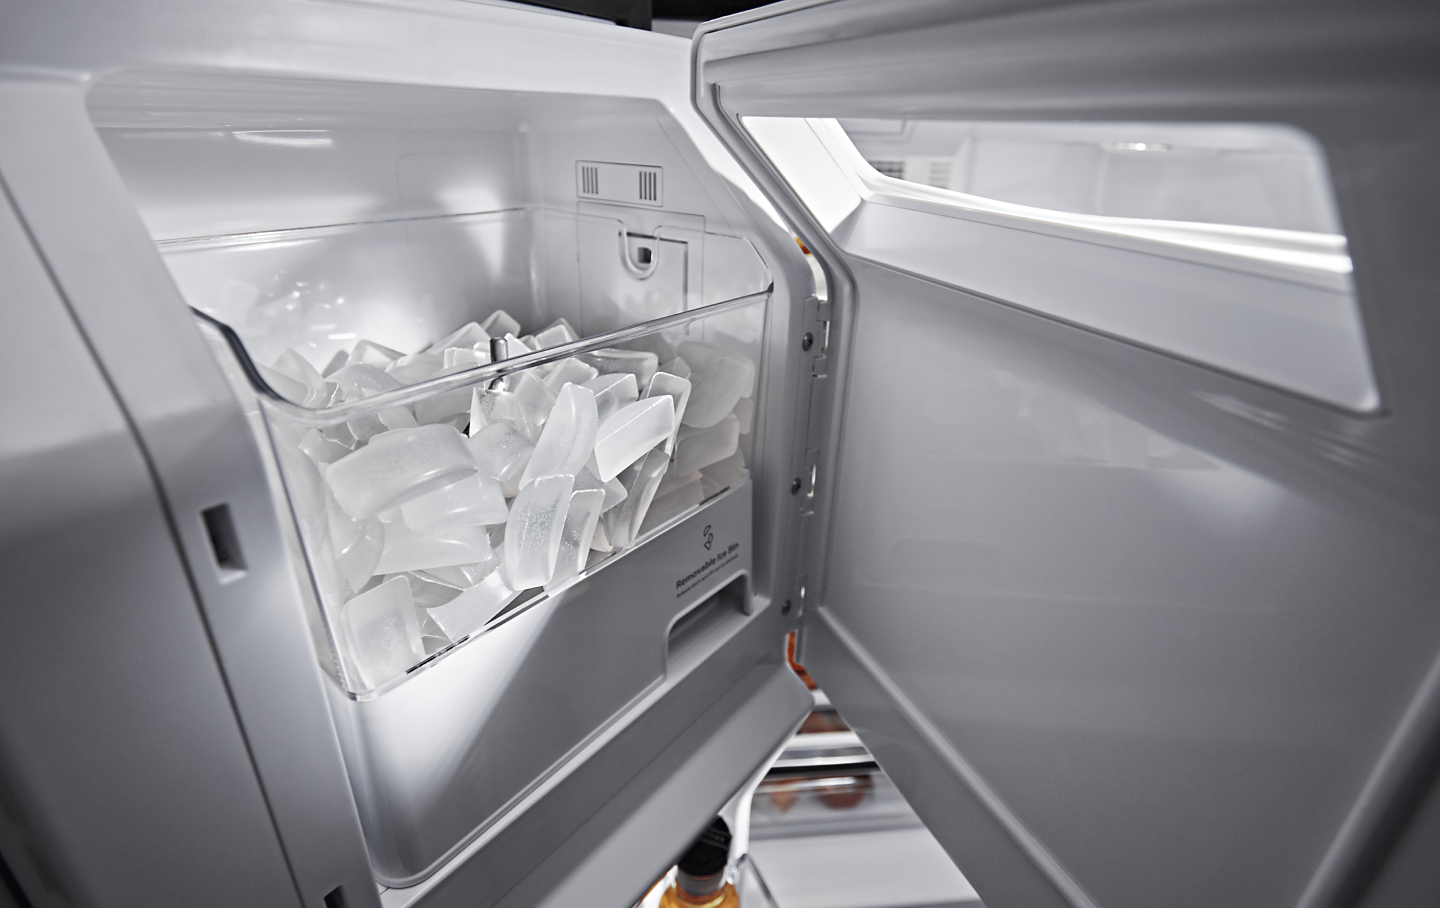 Refrigerator ice maker ice bin